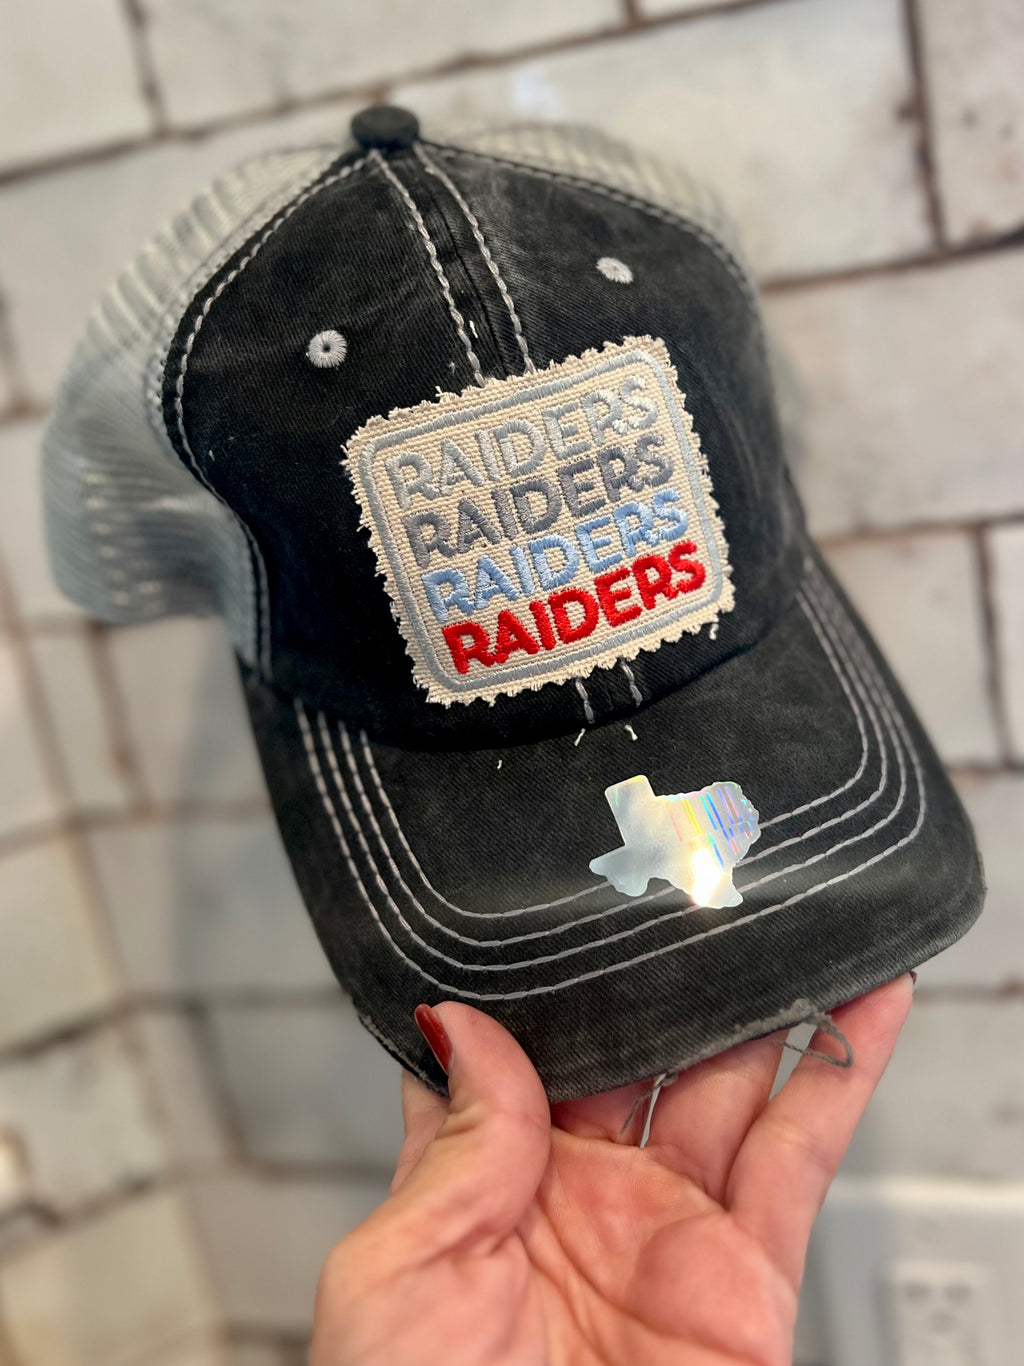 Raiders x4 on Grey Distressed